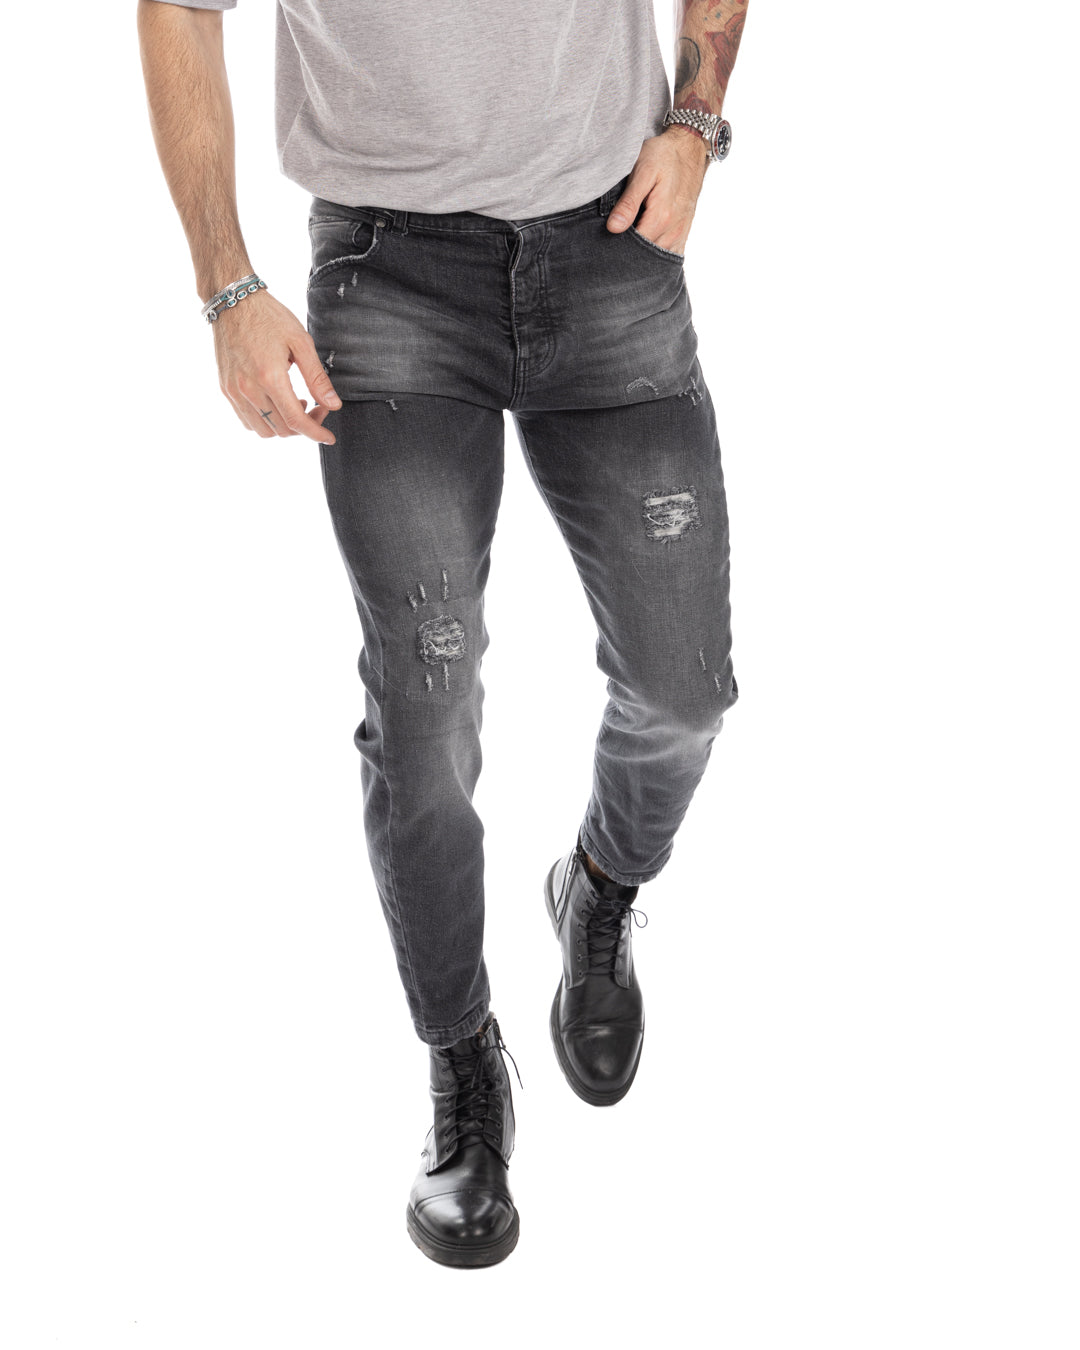 Soho - dark wash skinny jeans